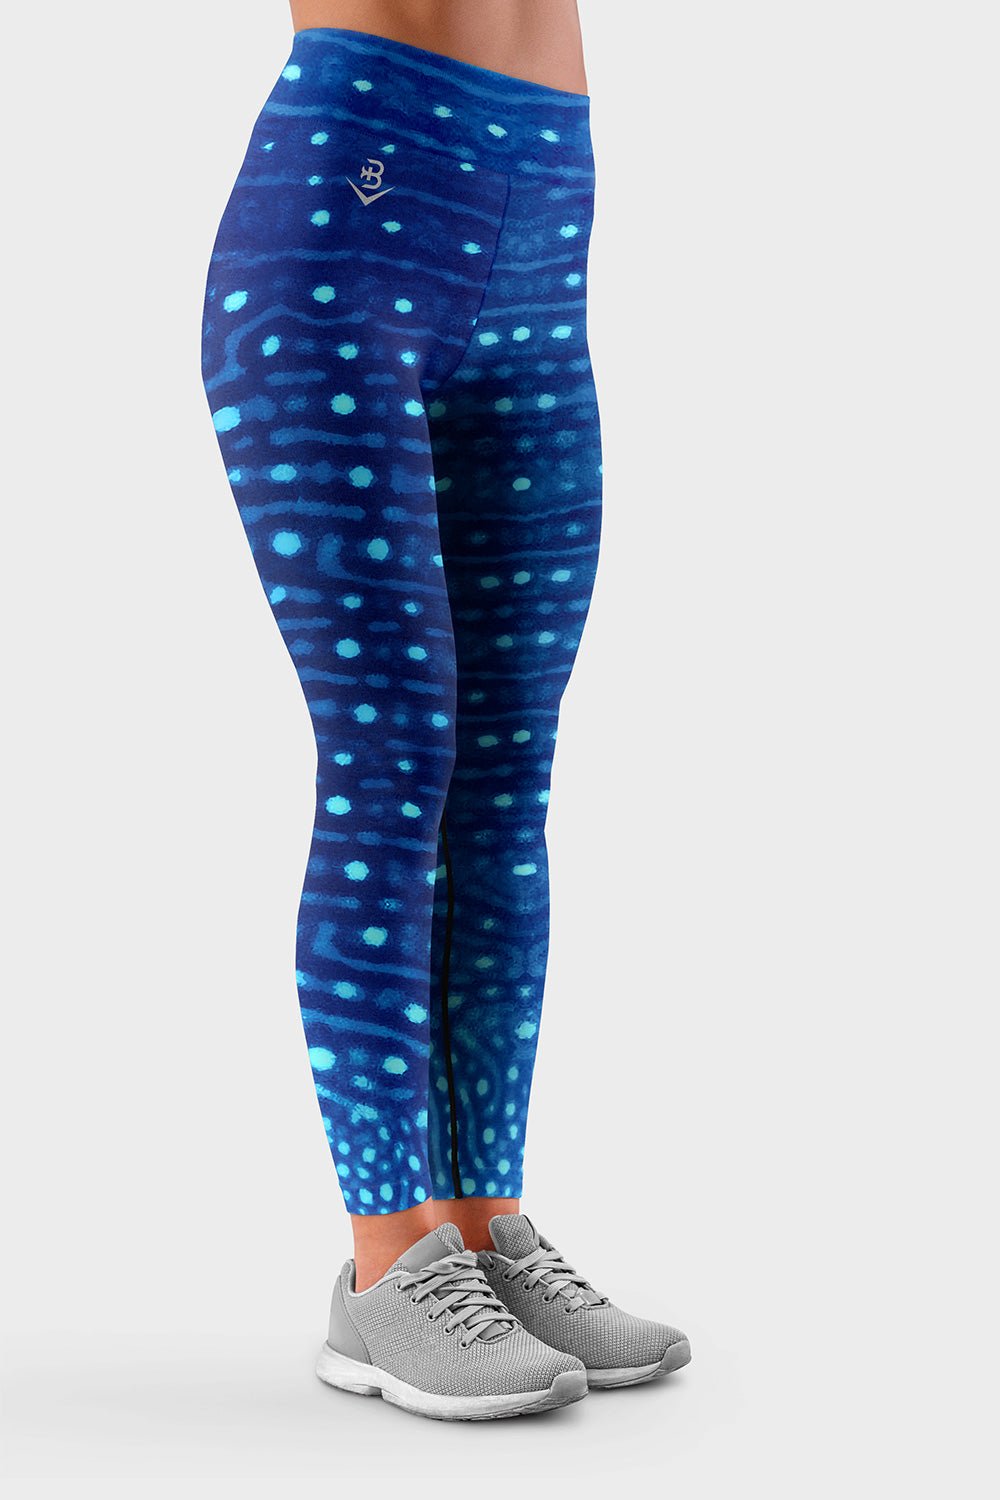 Dallonan Flare Yoga Pants Women Leggings Soft High Waisted Pants Cute  Unicorn Whale Multicolor at  Women's Clothing store